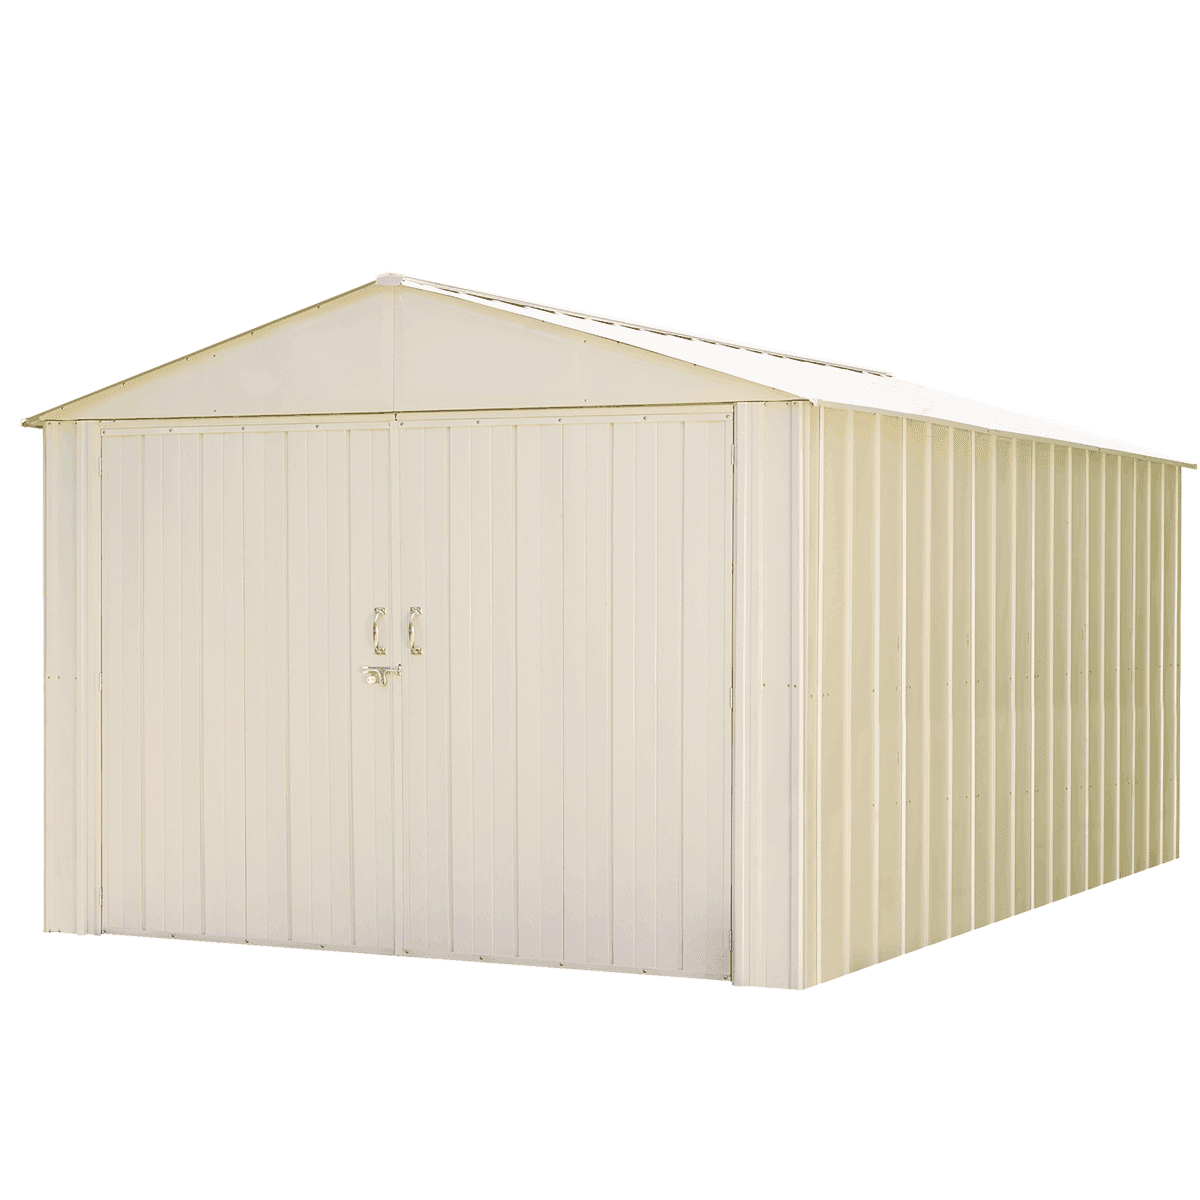 Shelter Logic Arrow Commander Series Storage Building, 10 ft. x 15 ft. x 8 ft. CHD1015-A